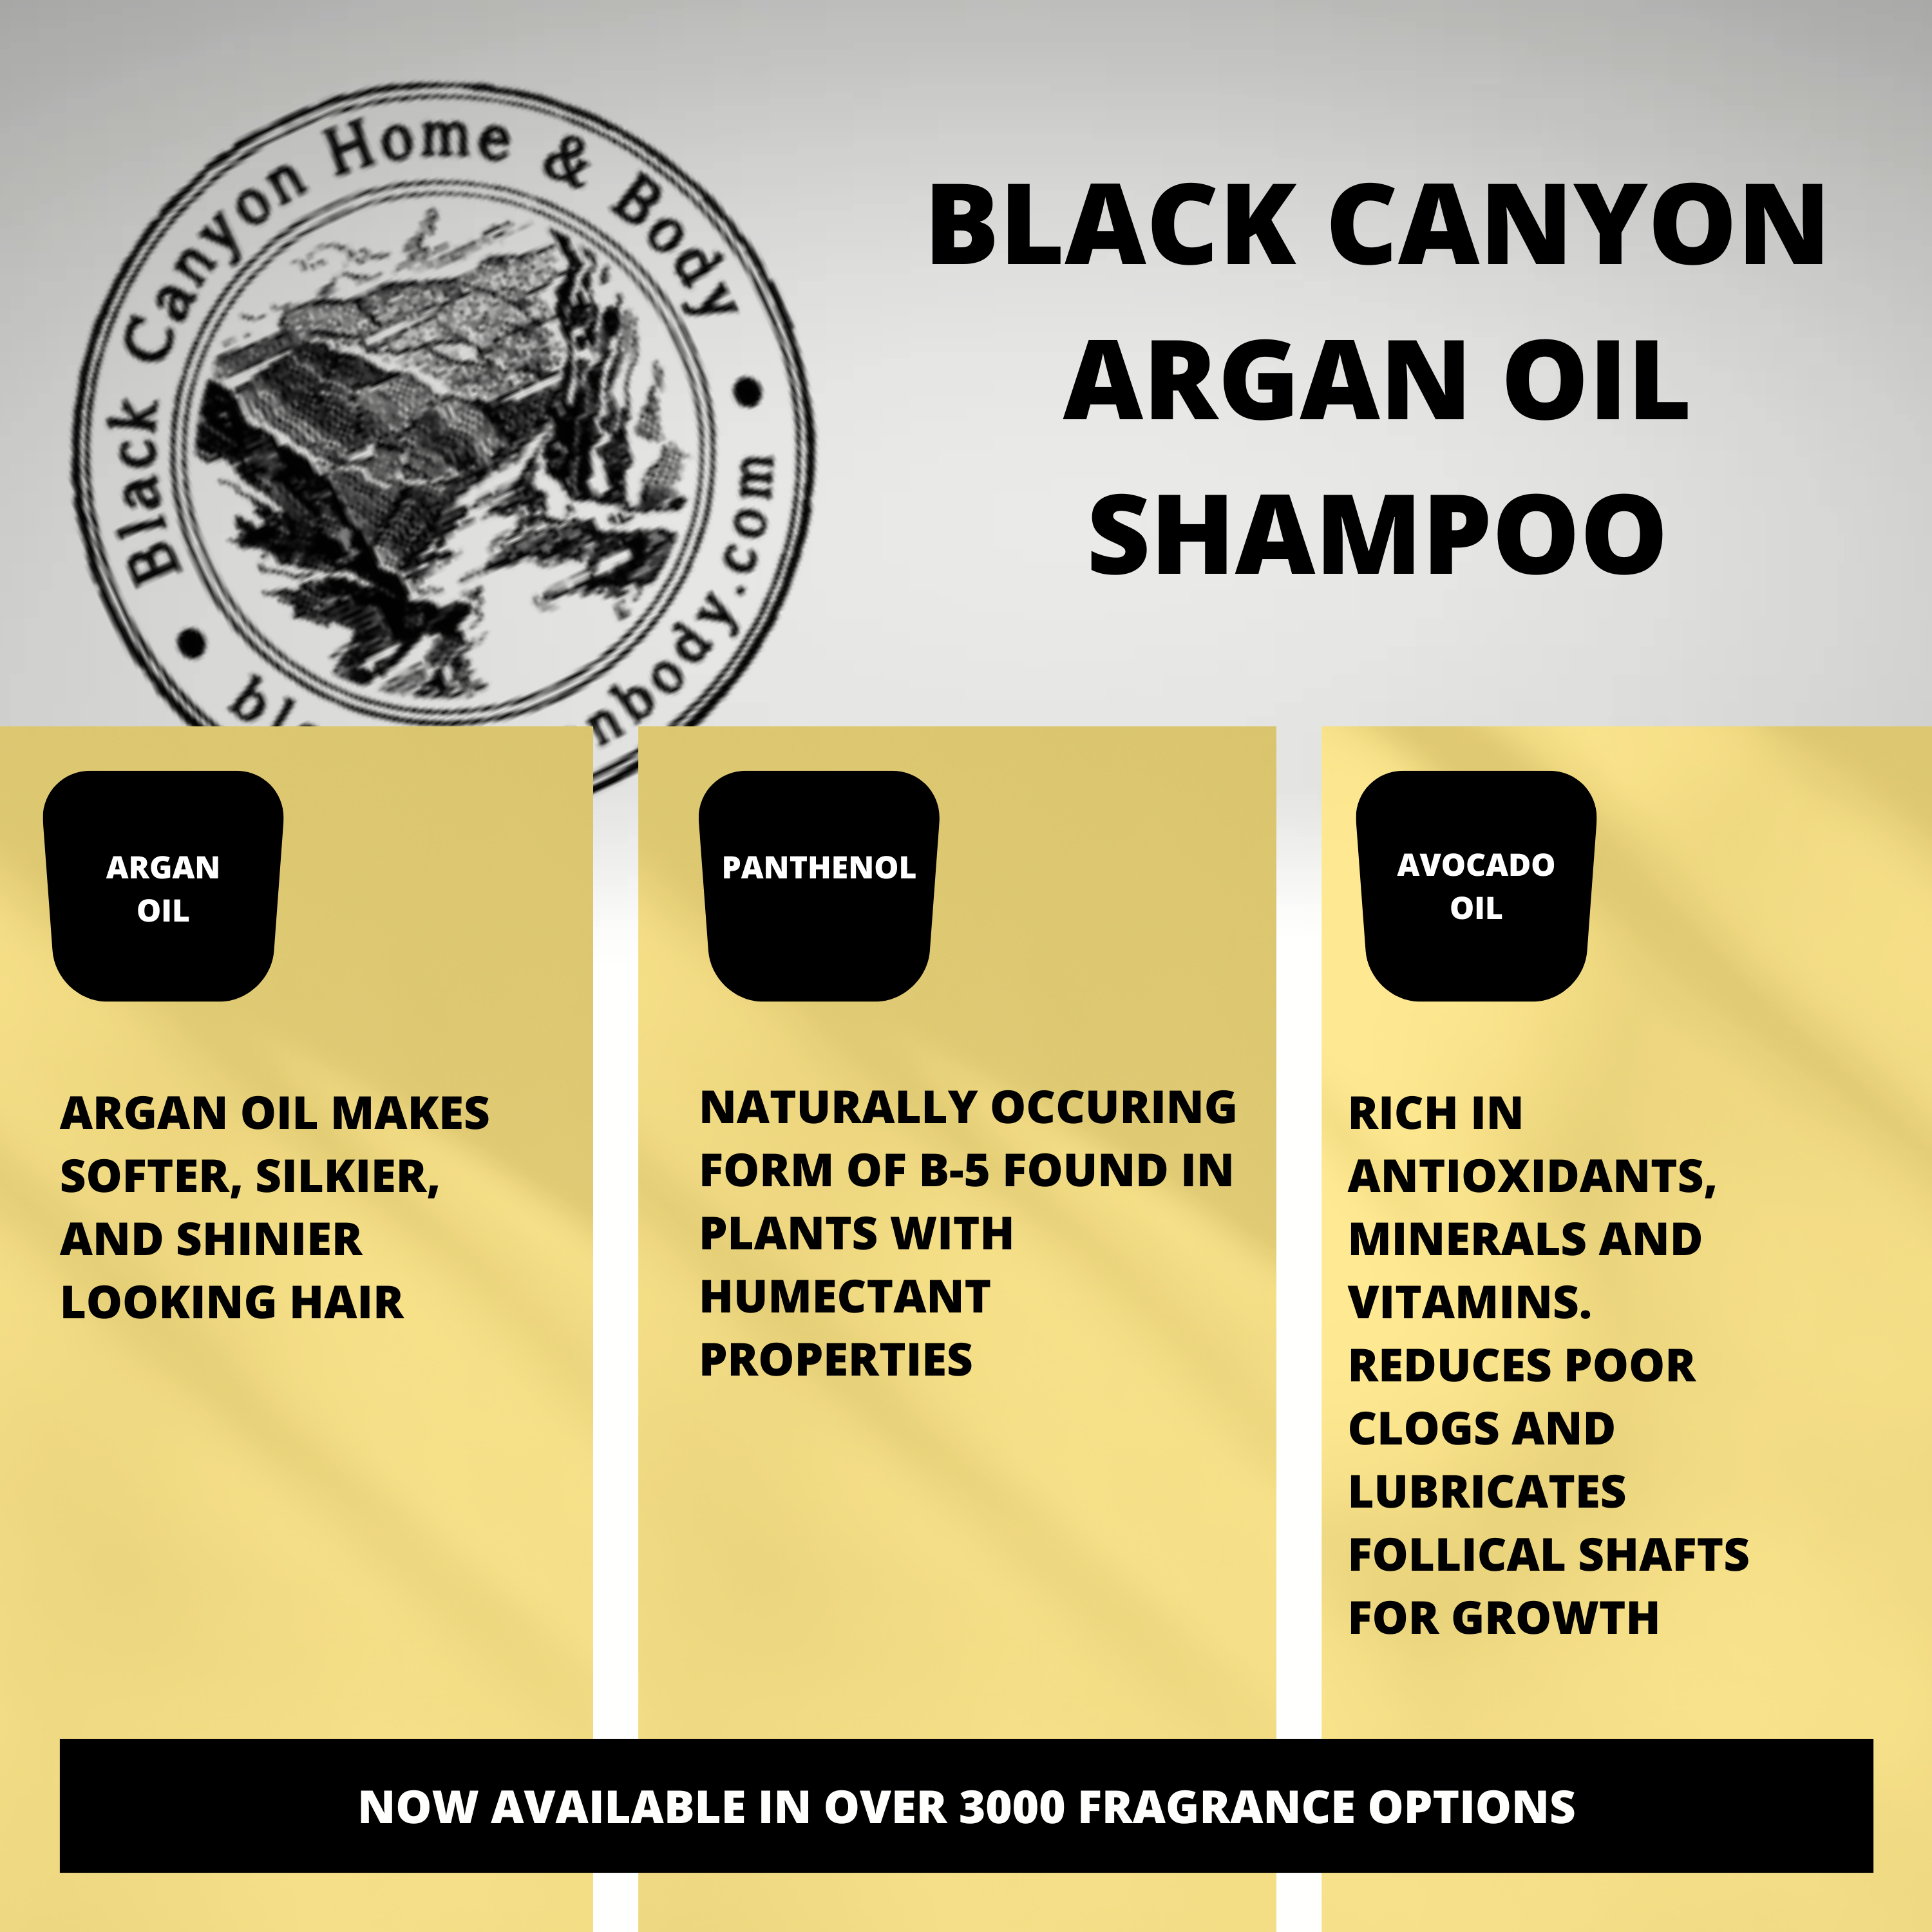 Black Canyon Banana Cream Pie Scented Shampoo with Argan Oil